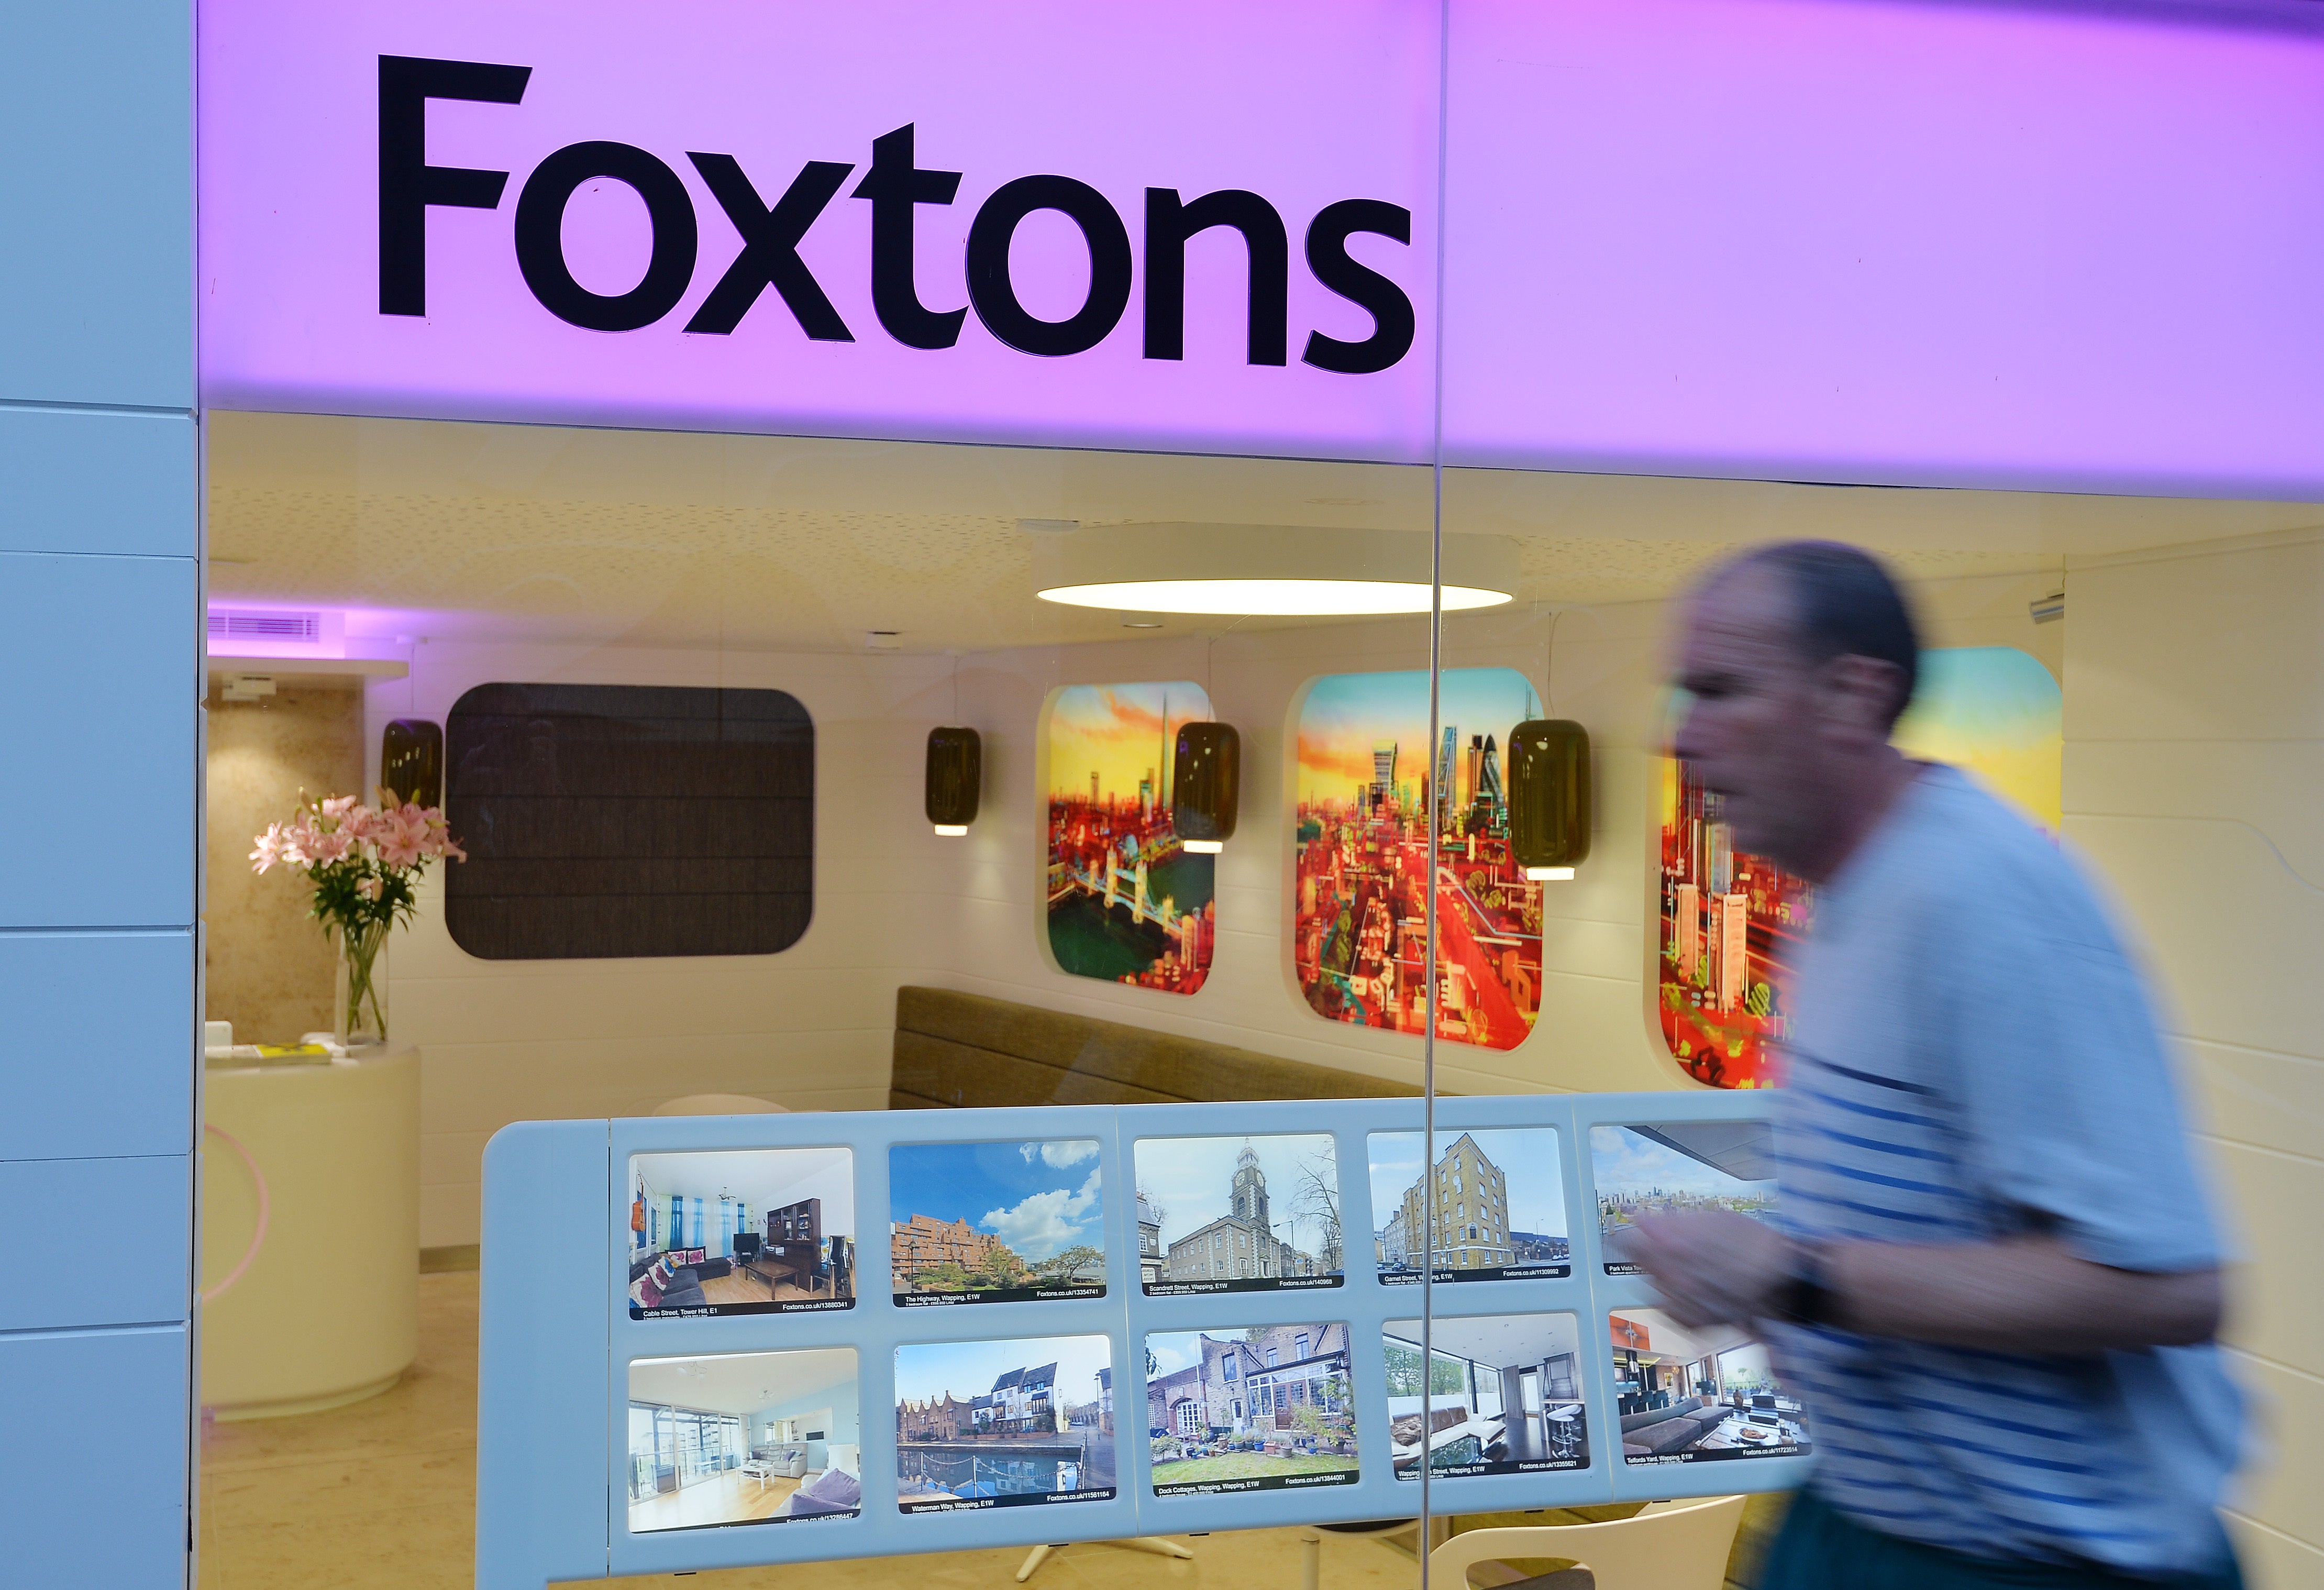 Foxtons has reduced bonuses after a shareholder backlash. (John Stillwell / PA)